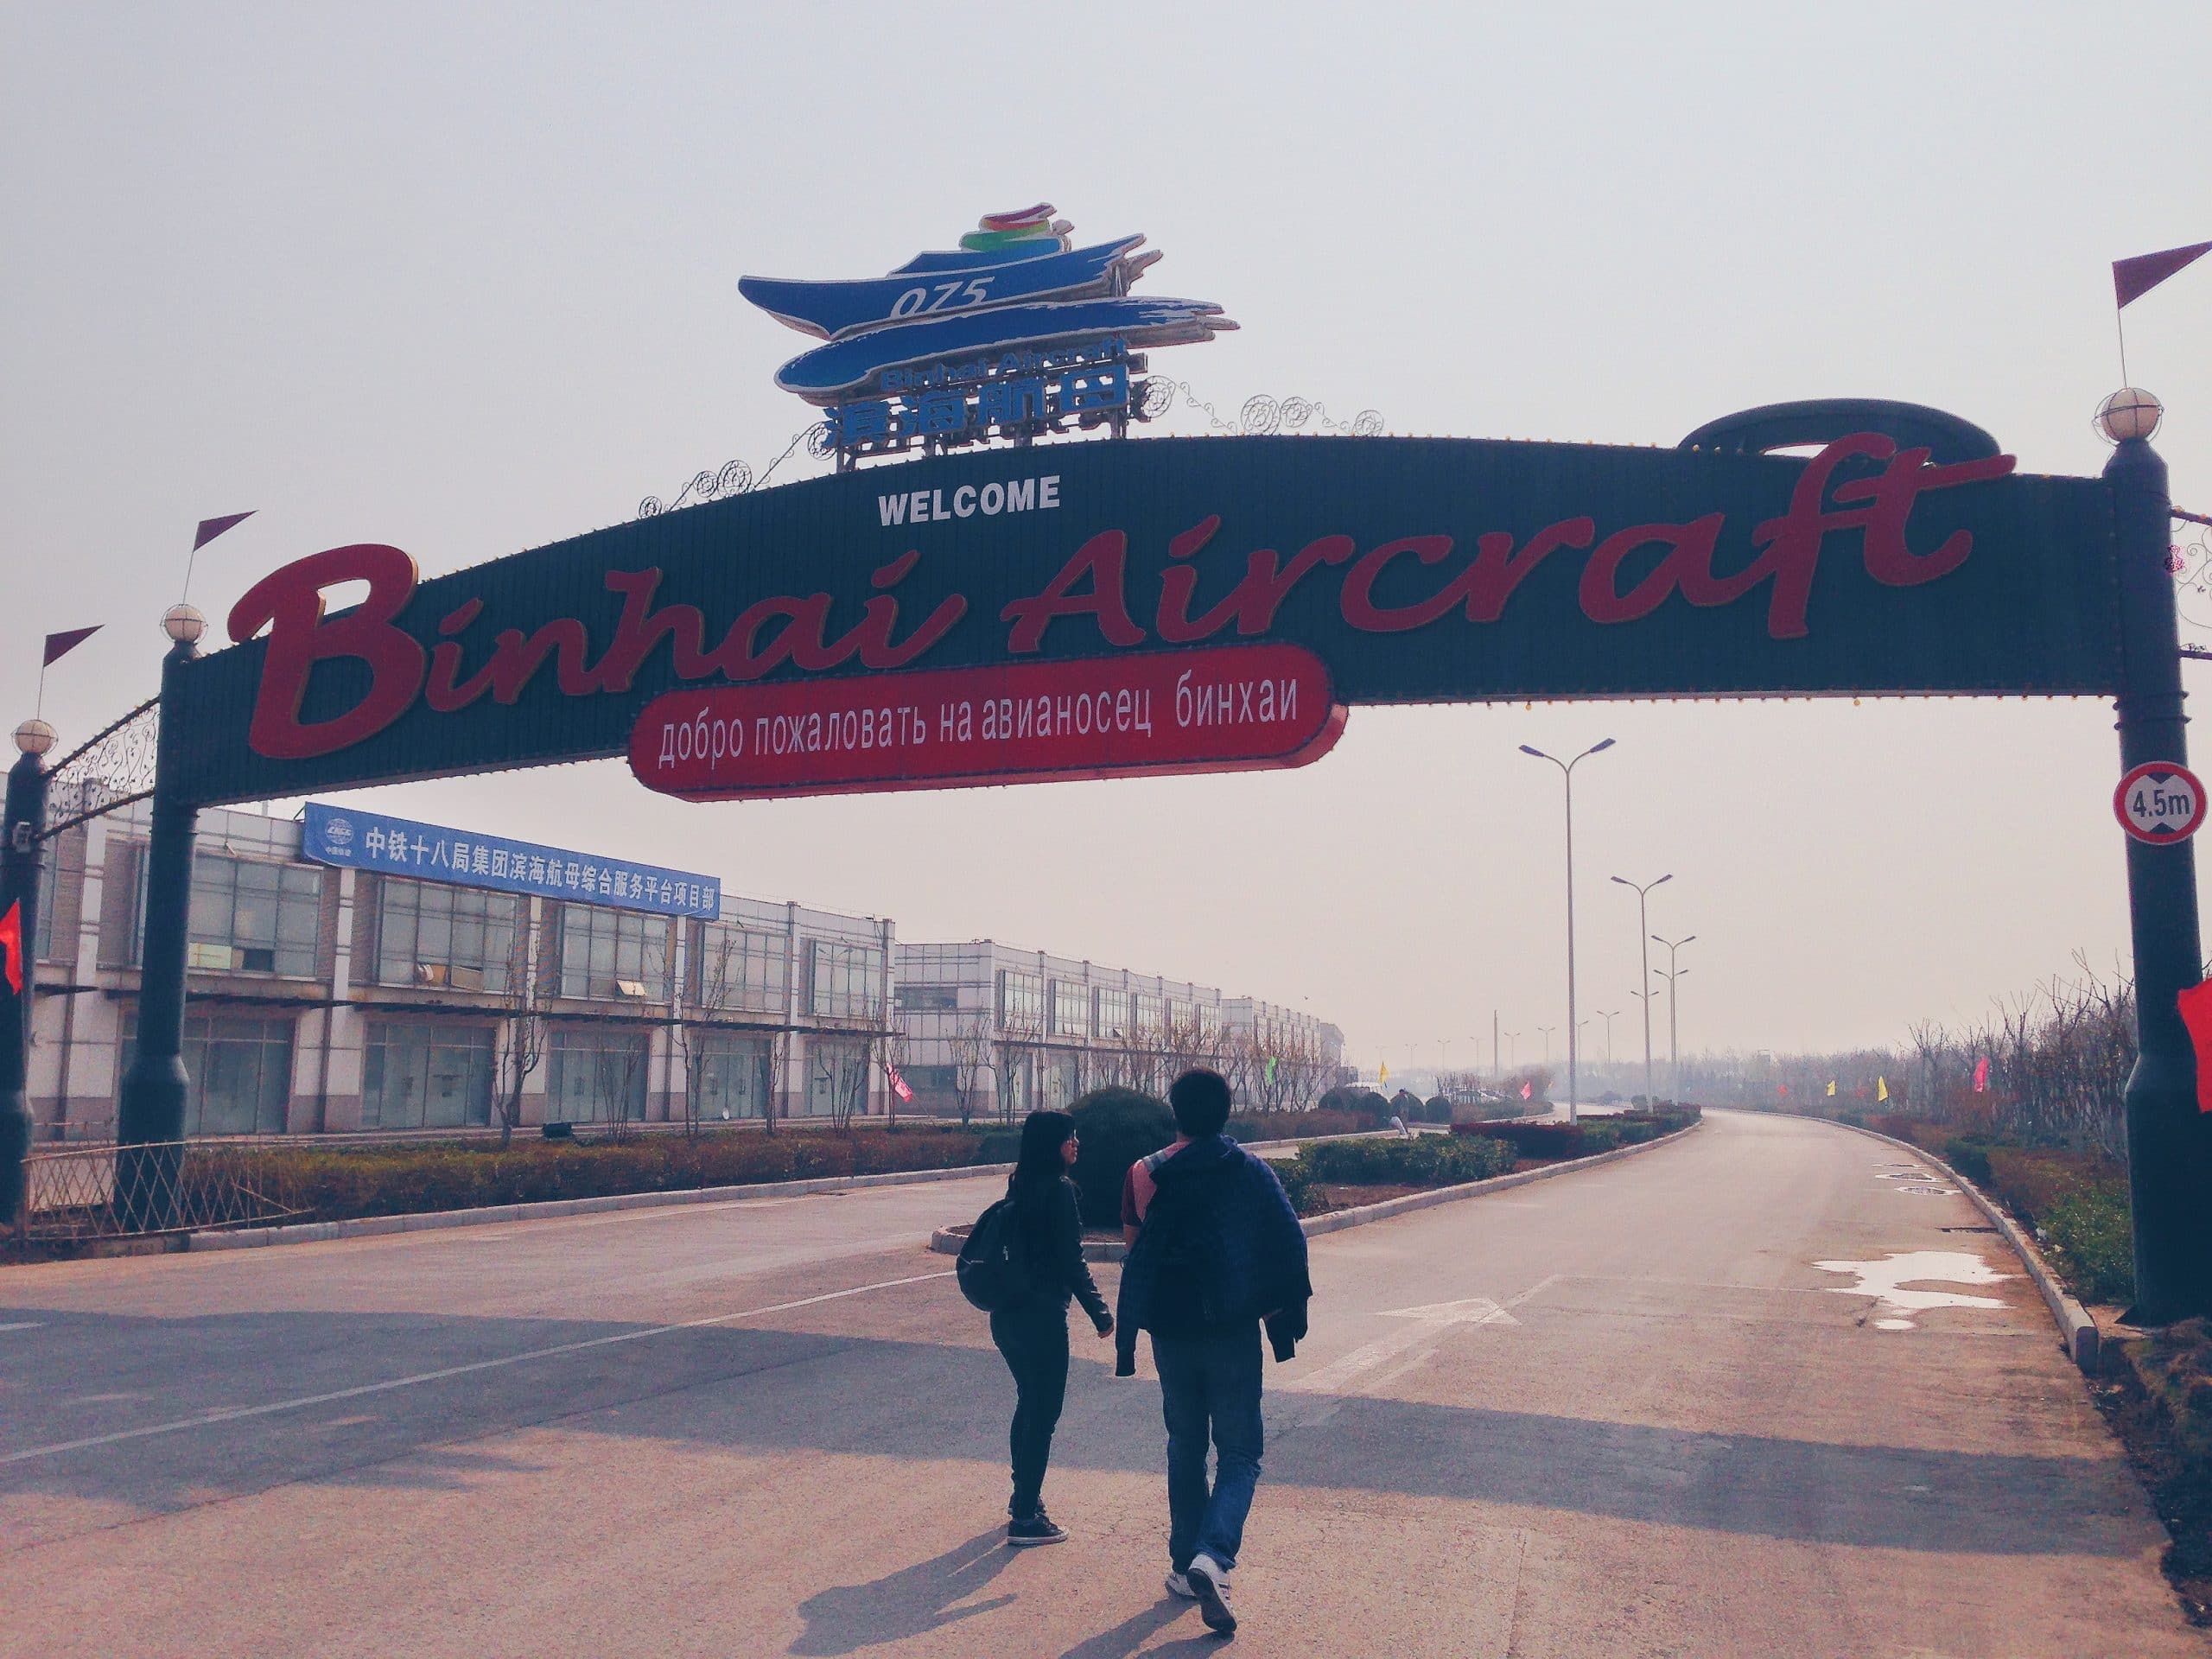 Binhai Aircraft Carrier Theme Park in Tianjin